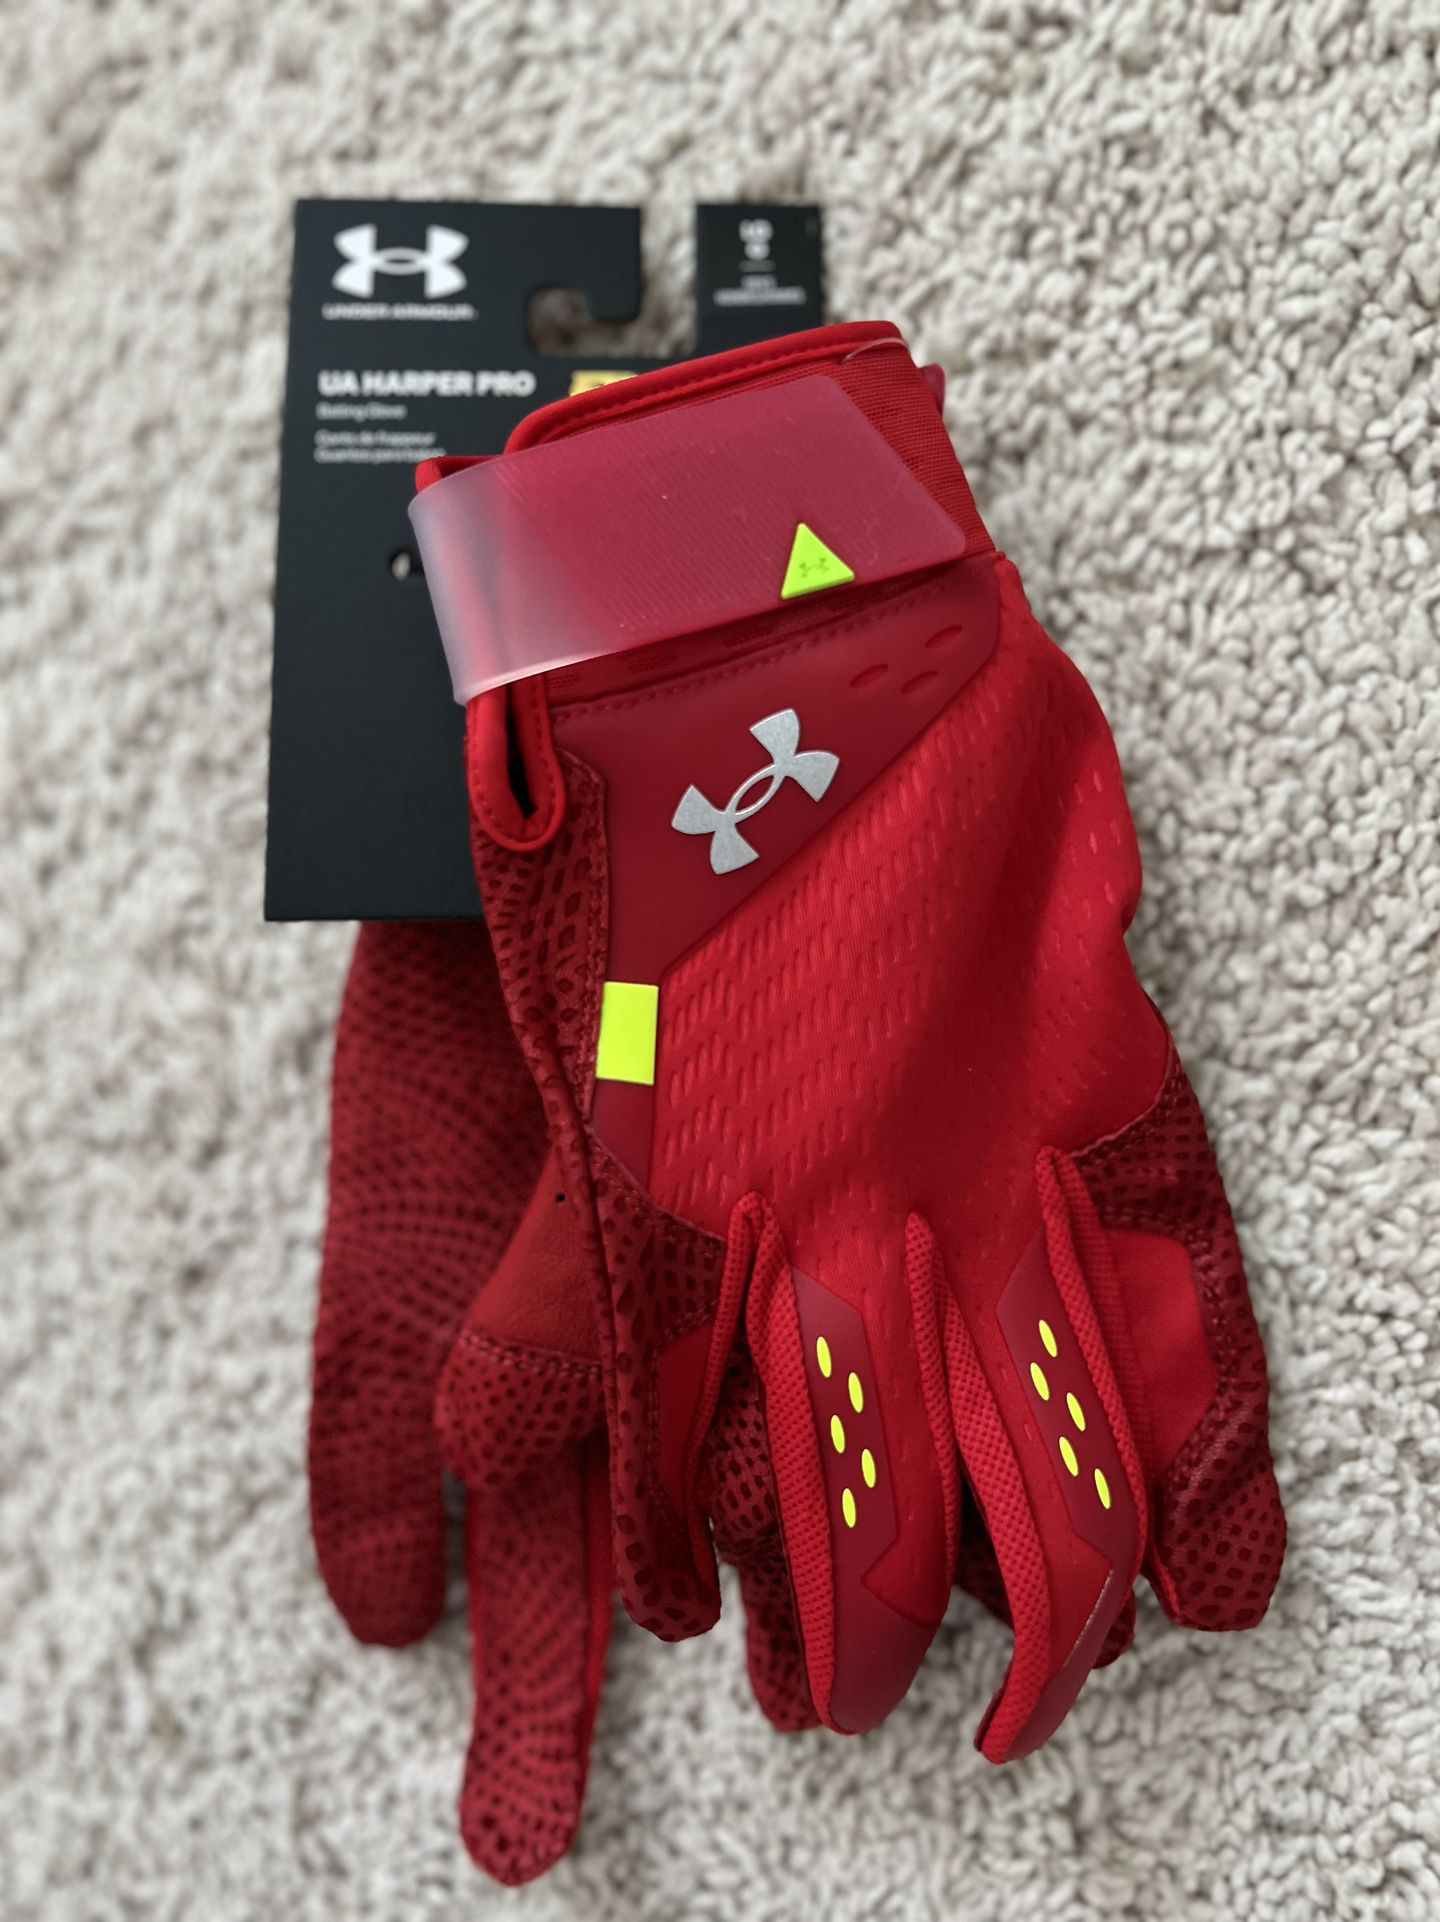 Under Armour Bryce Harper UA Pro Harper Red Batting Gloves  - Brand New - Size: Large - SKU: 1365465-600 